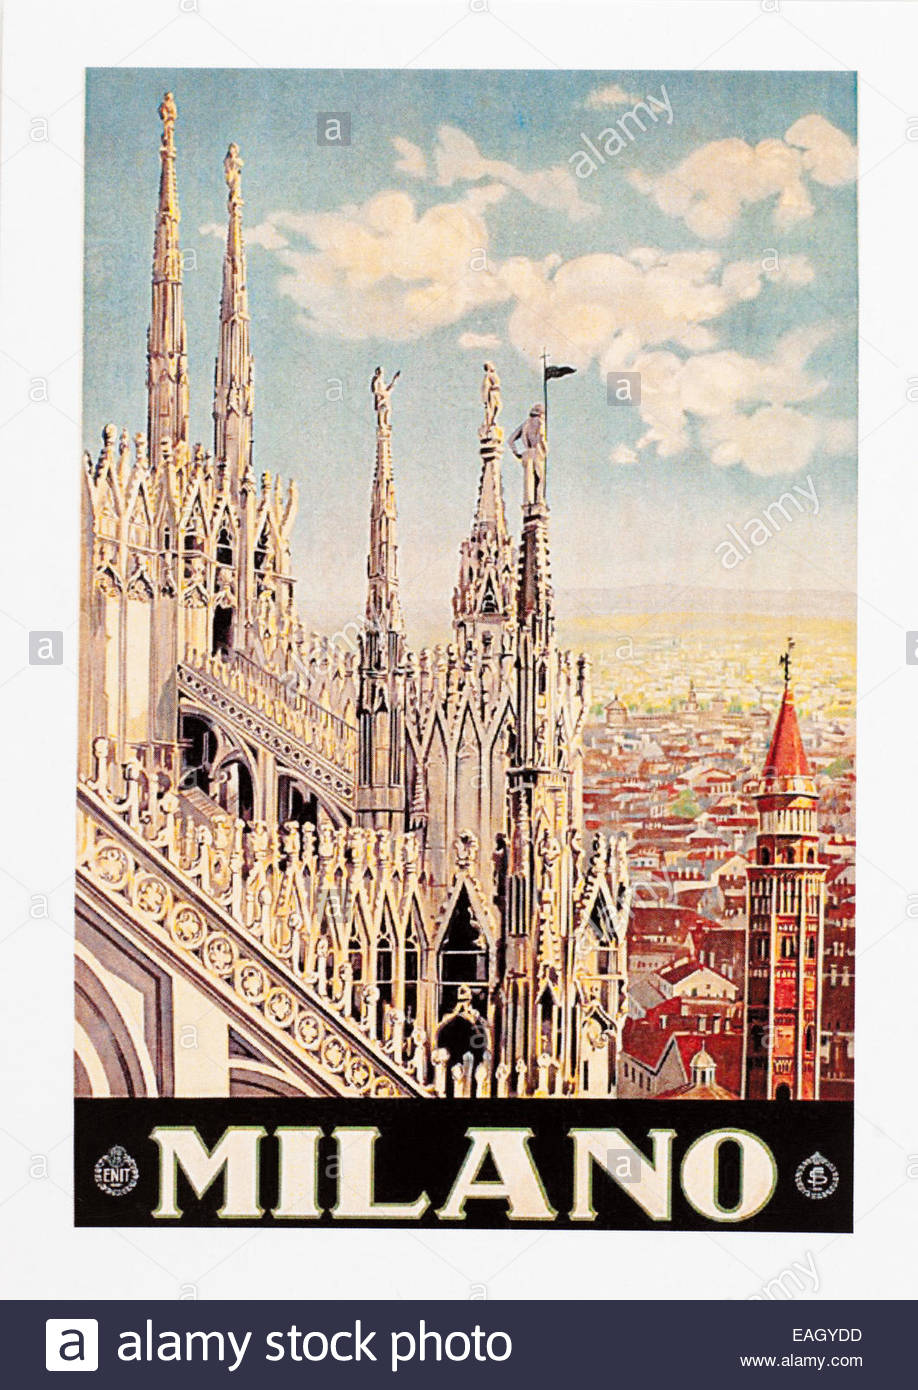 1928 Milano Italy Europe Vintage Italian Travel Advertisement Art Poster Print